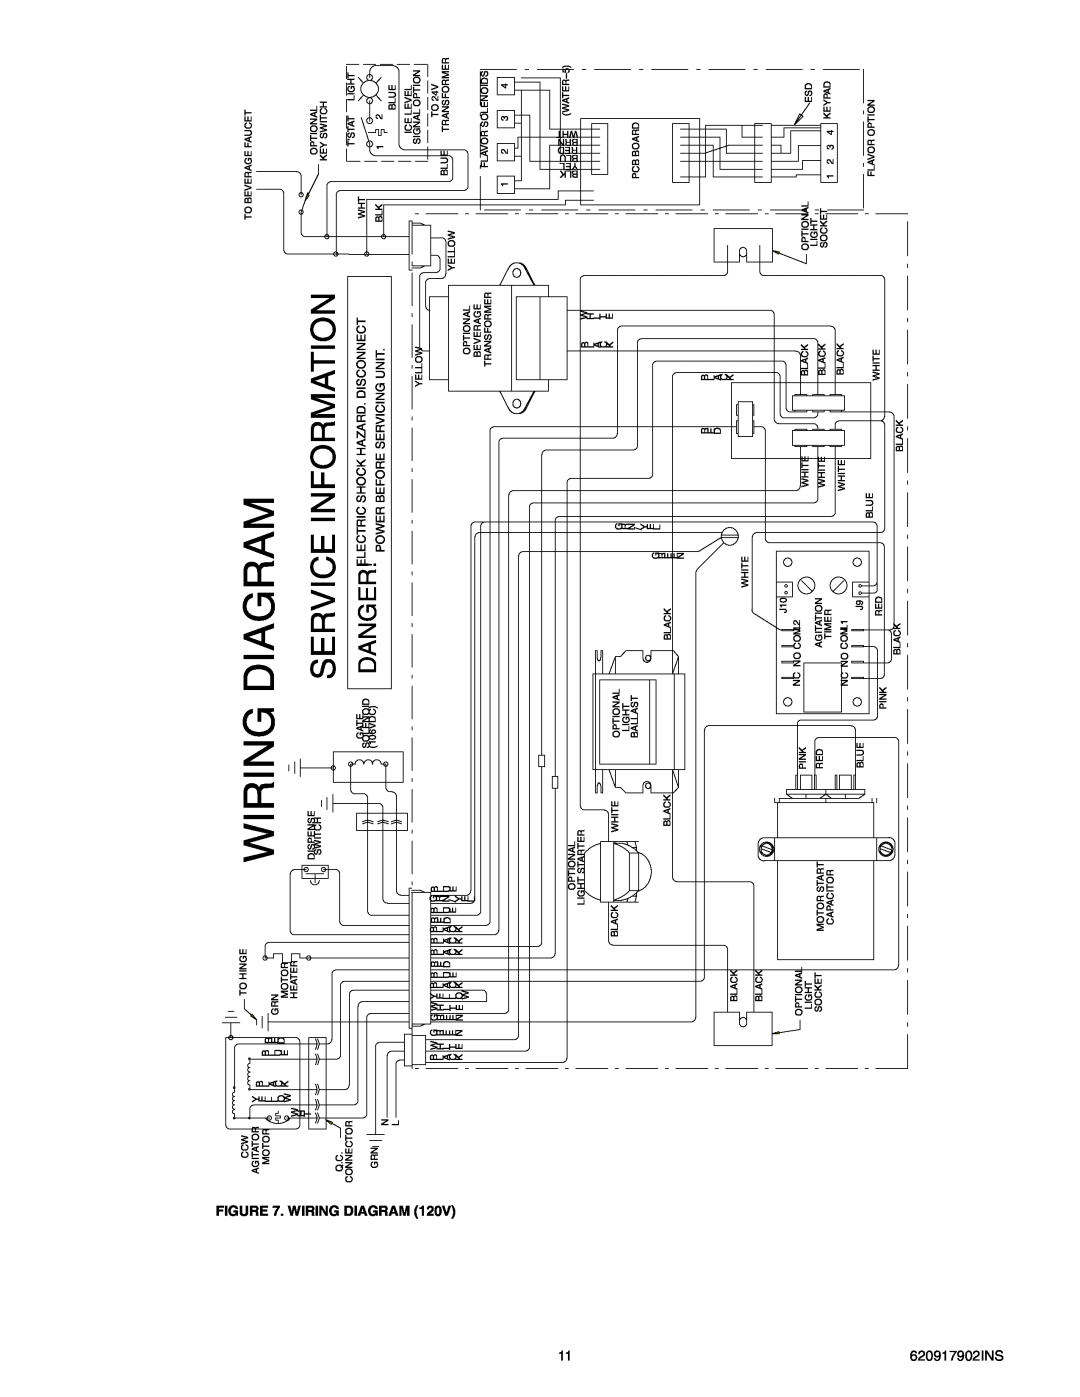 Cornelius ENDURO-175 installation manual Service Information, Wiring Diagram, 120V 